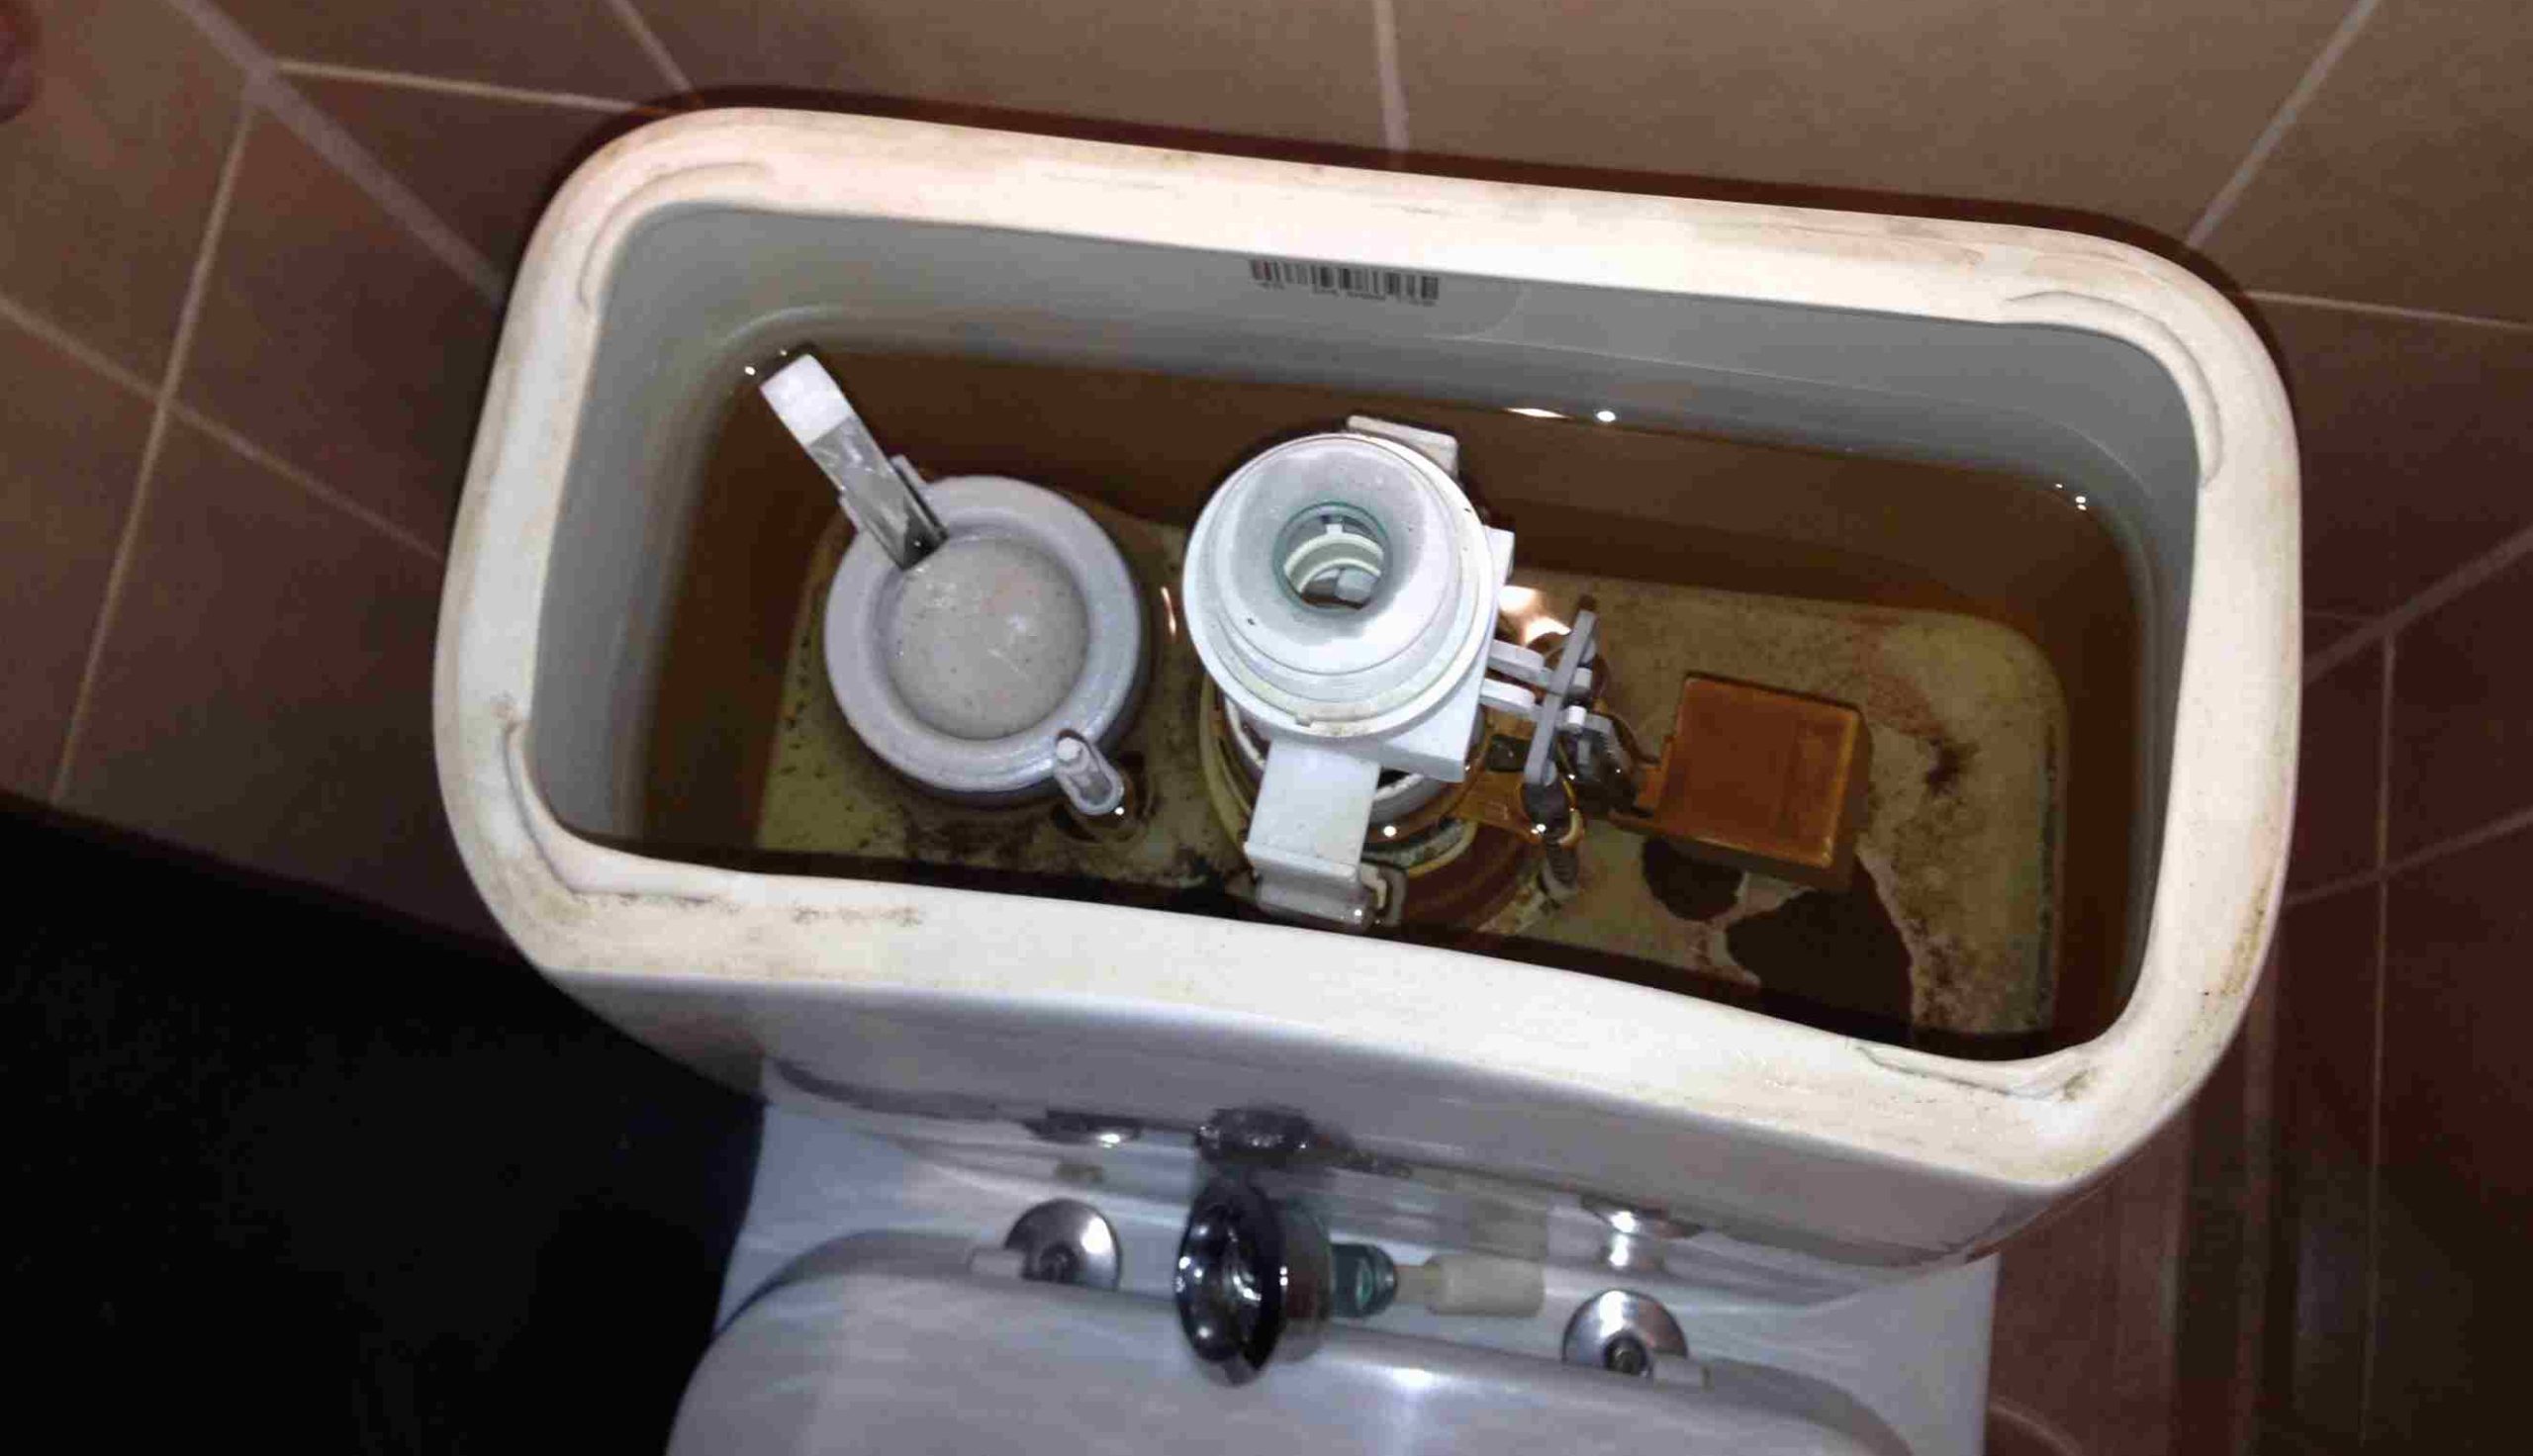 Squat pan toilet leaking